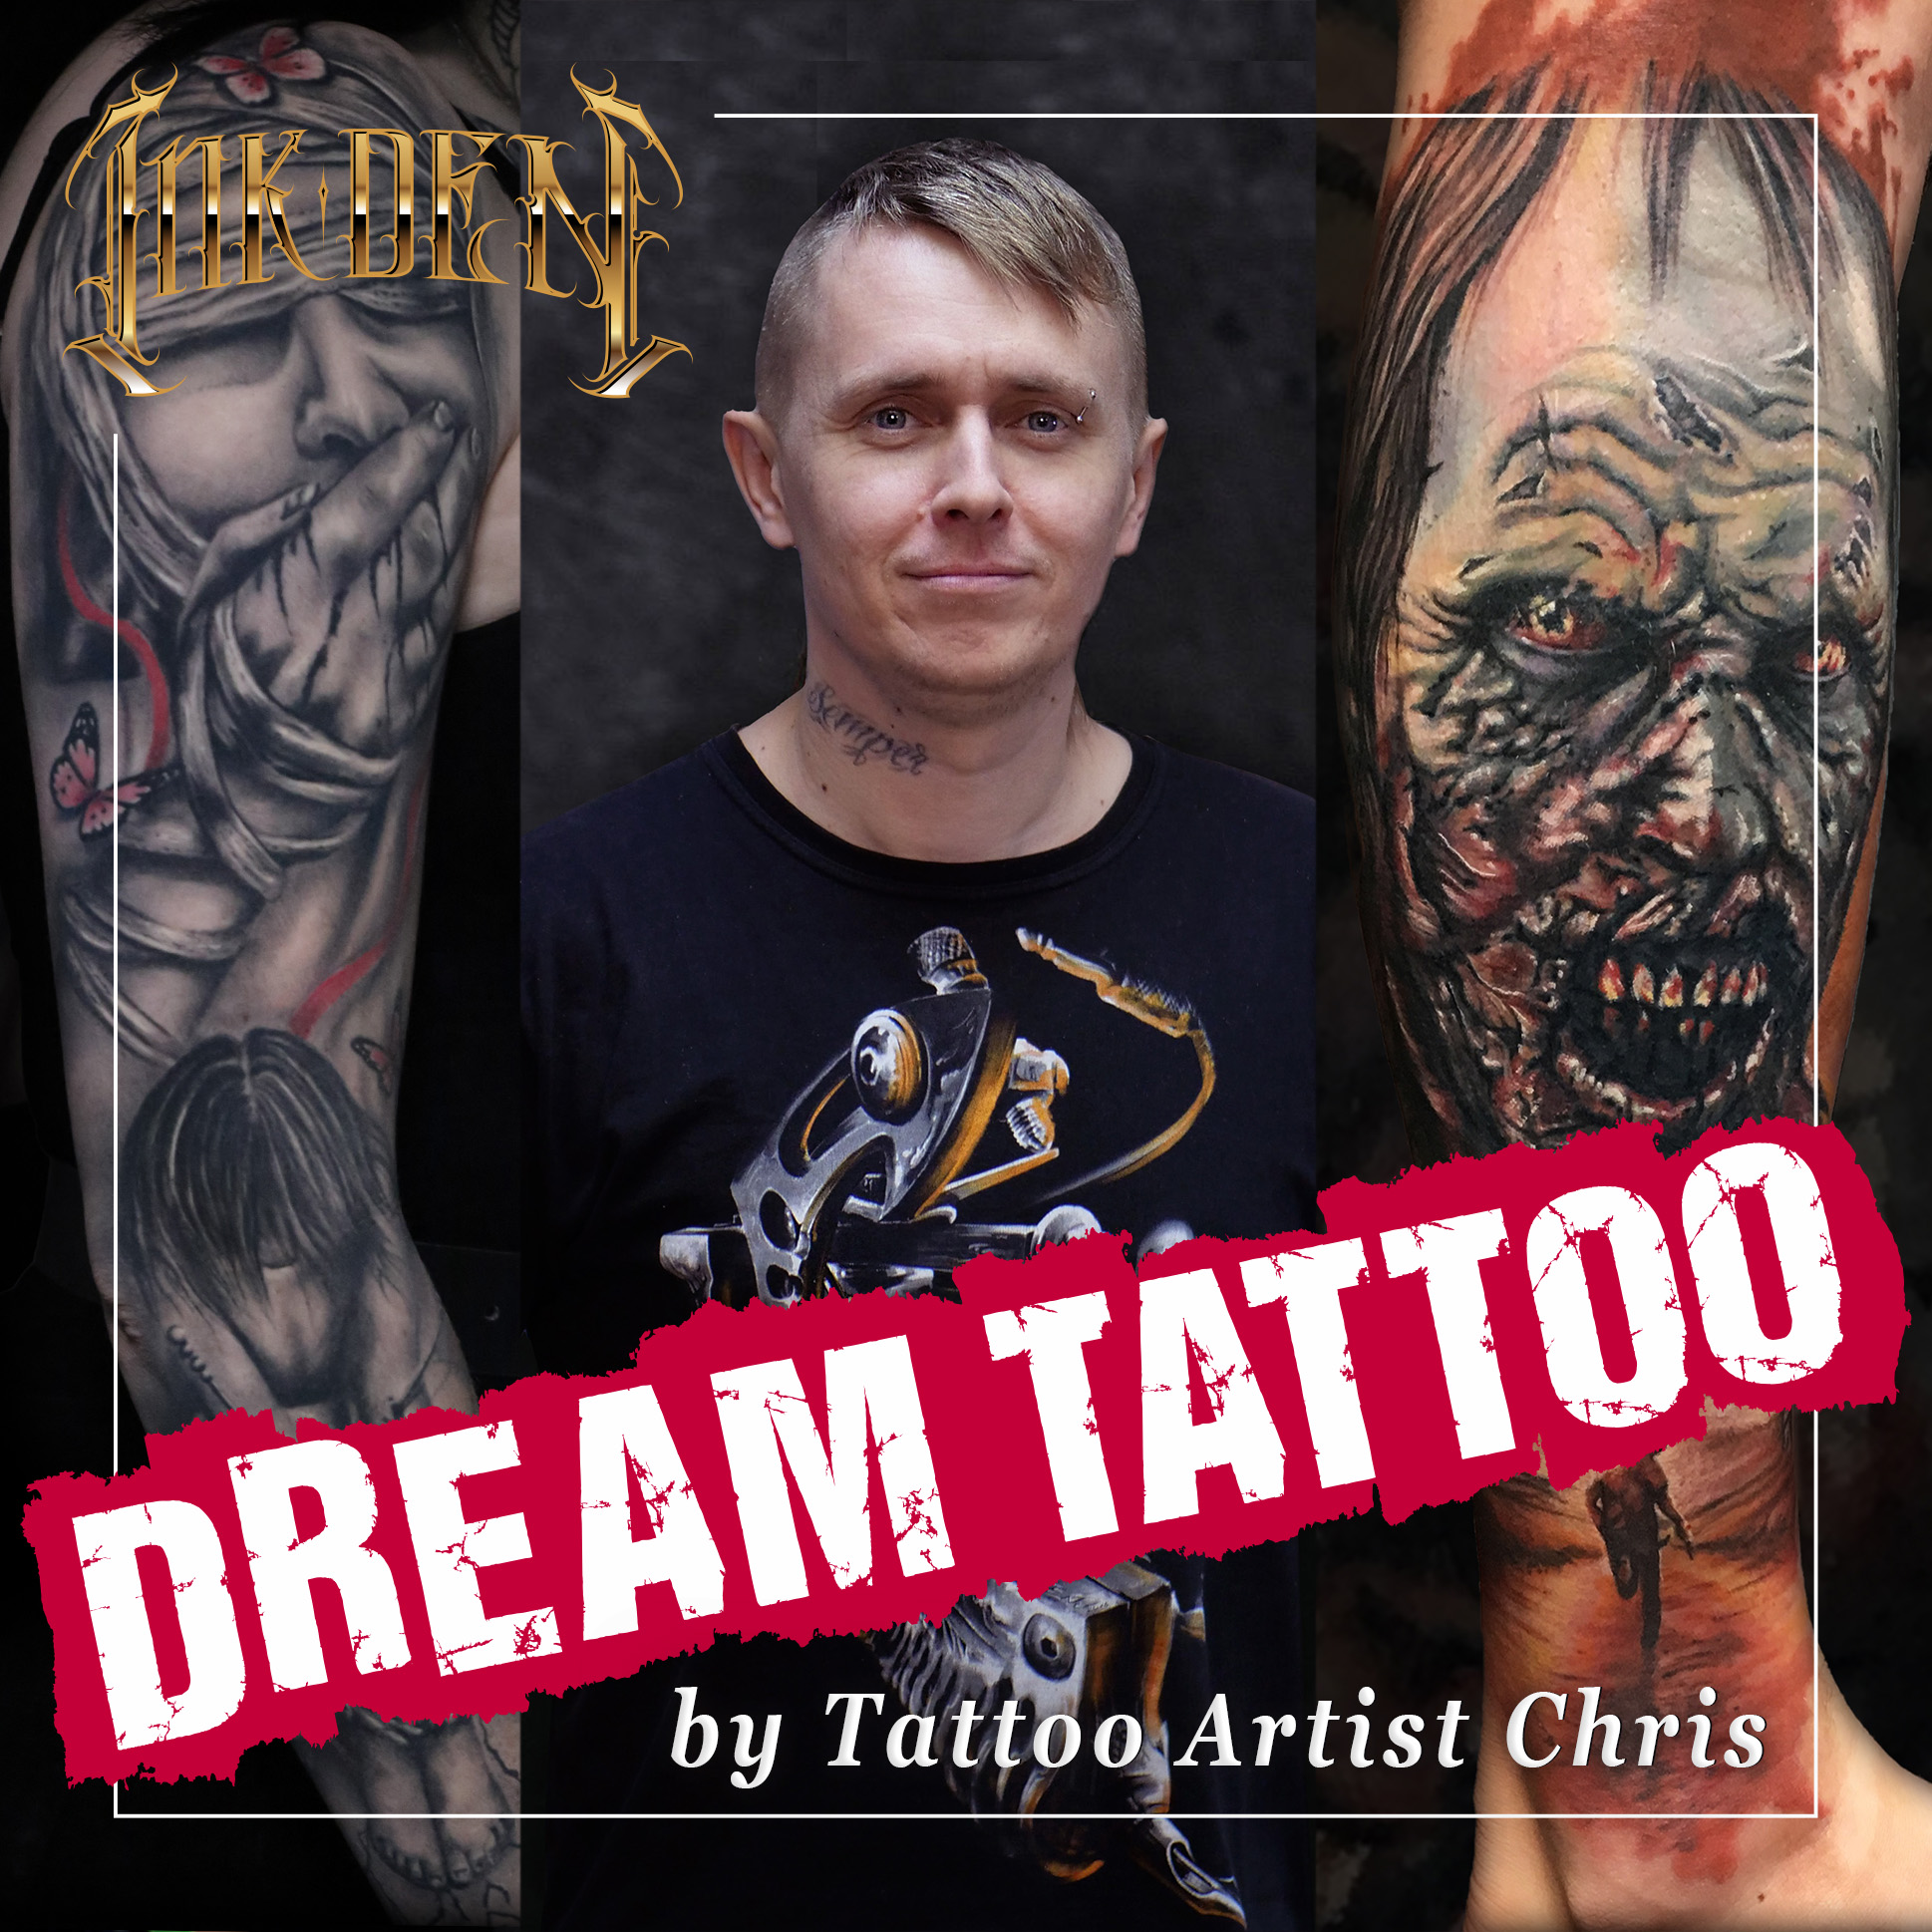 artist Archives - Inkden Tattoo Studio